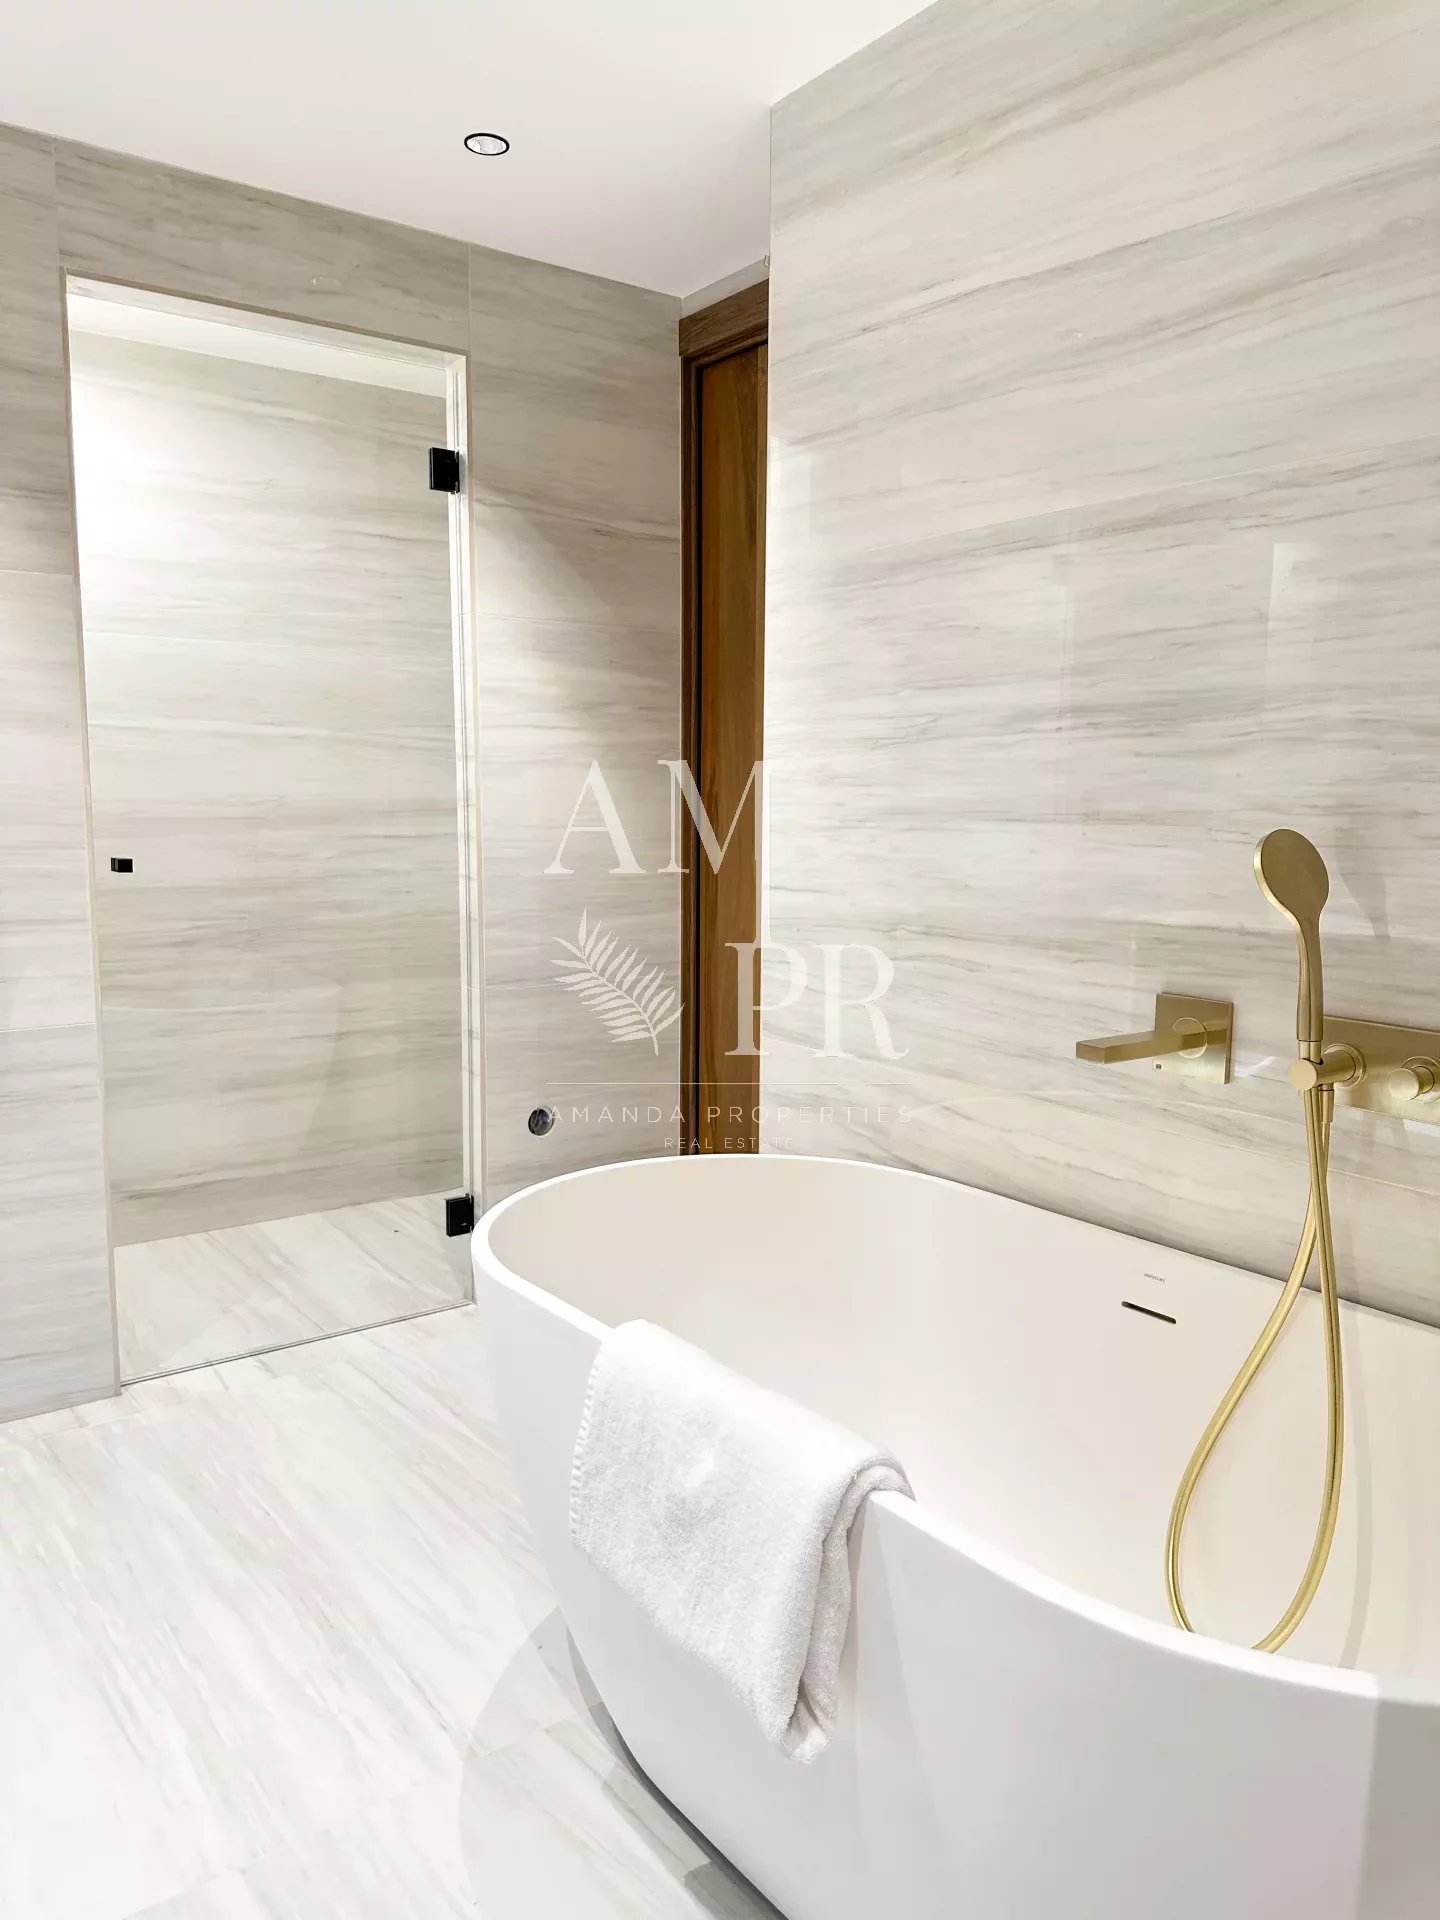 Cannes Croix des Gardes - Apartment villa 182sqm - Unobstructed view - Absolute tranquillity